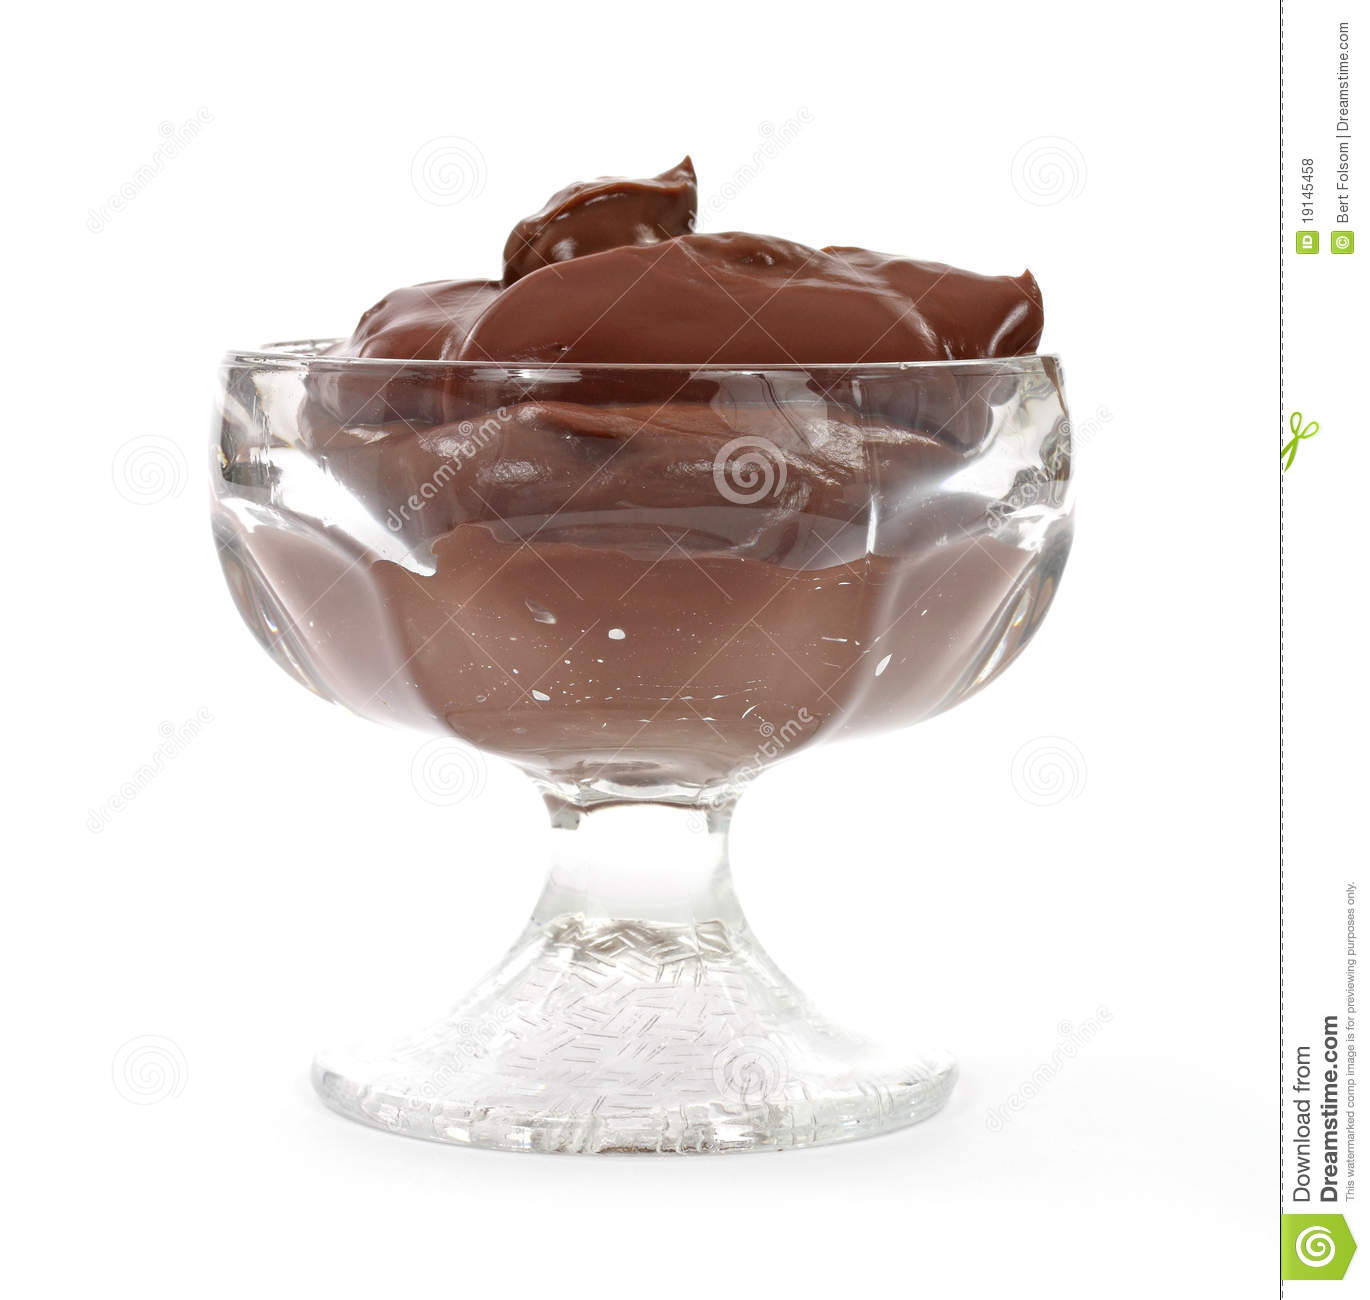 Chocolate Pudding Dessert Stock Photos.